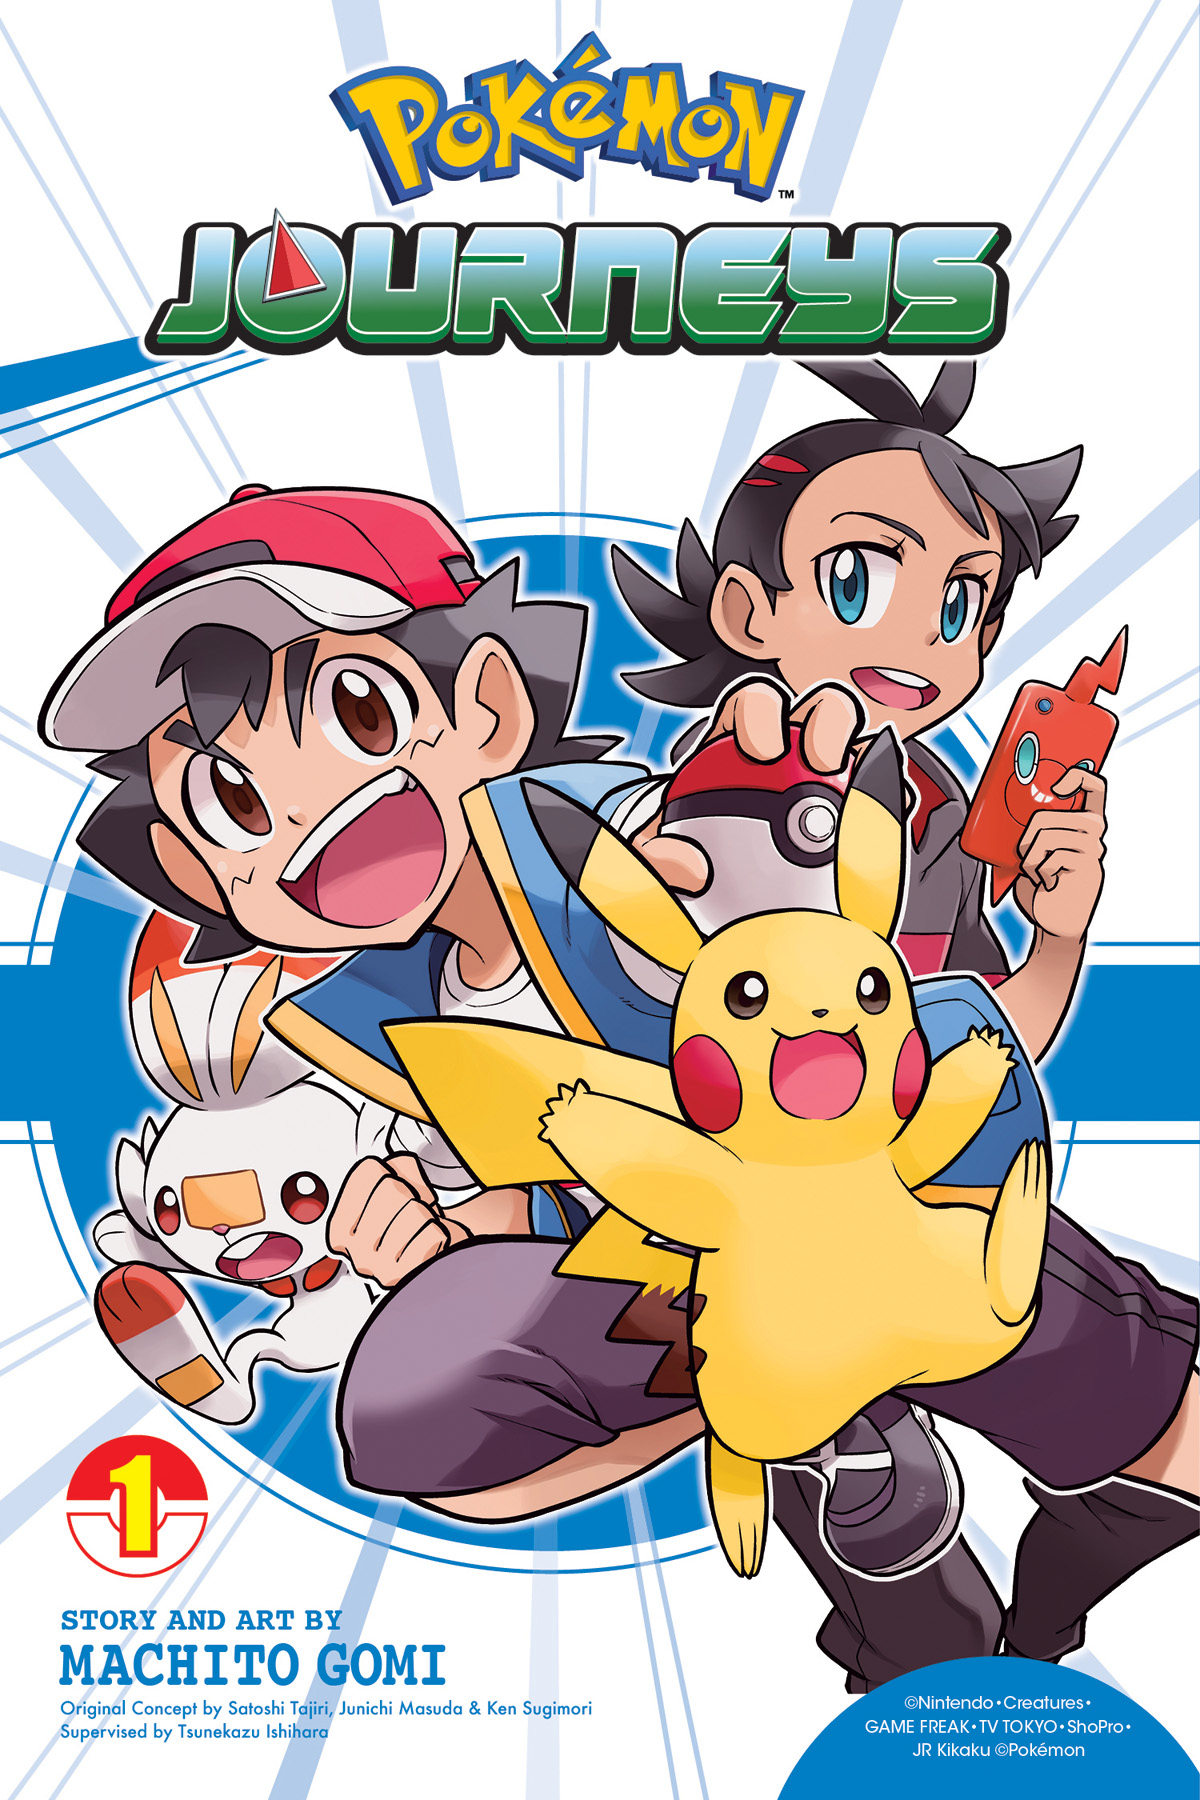 Pokemon Journeys Manga Vol. 1 Makes Goh and Scorbunny Stars